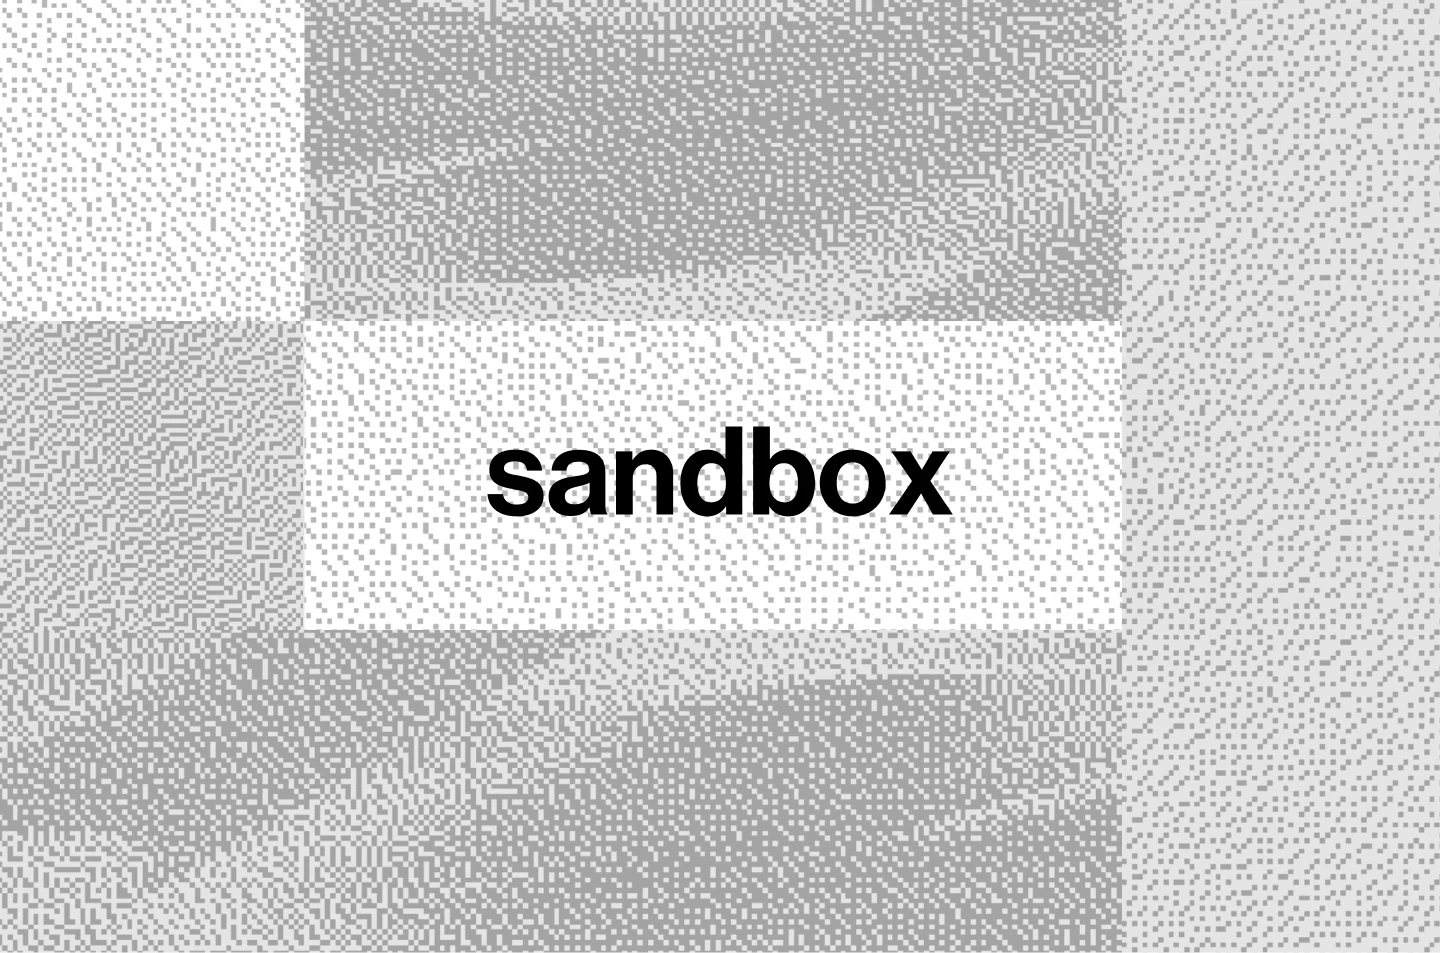 Sandbox DAO